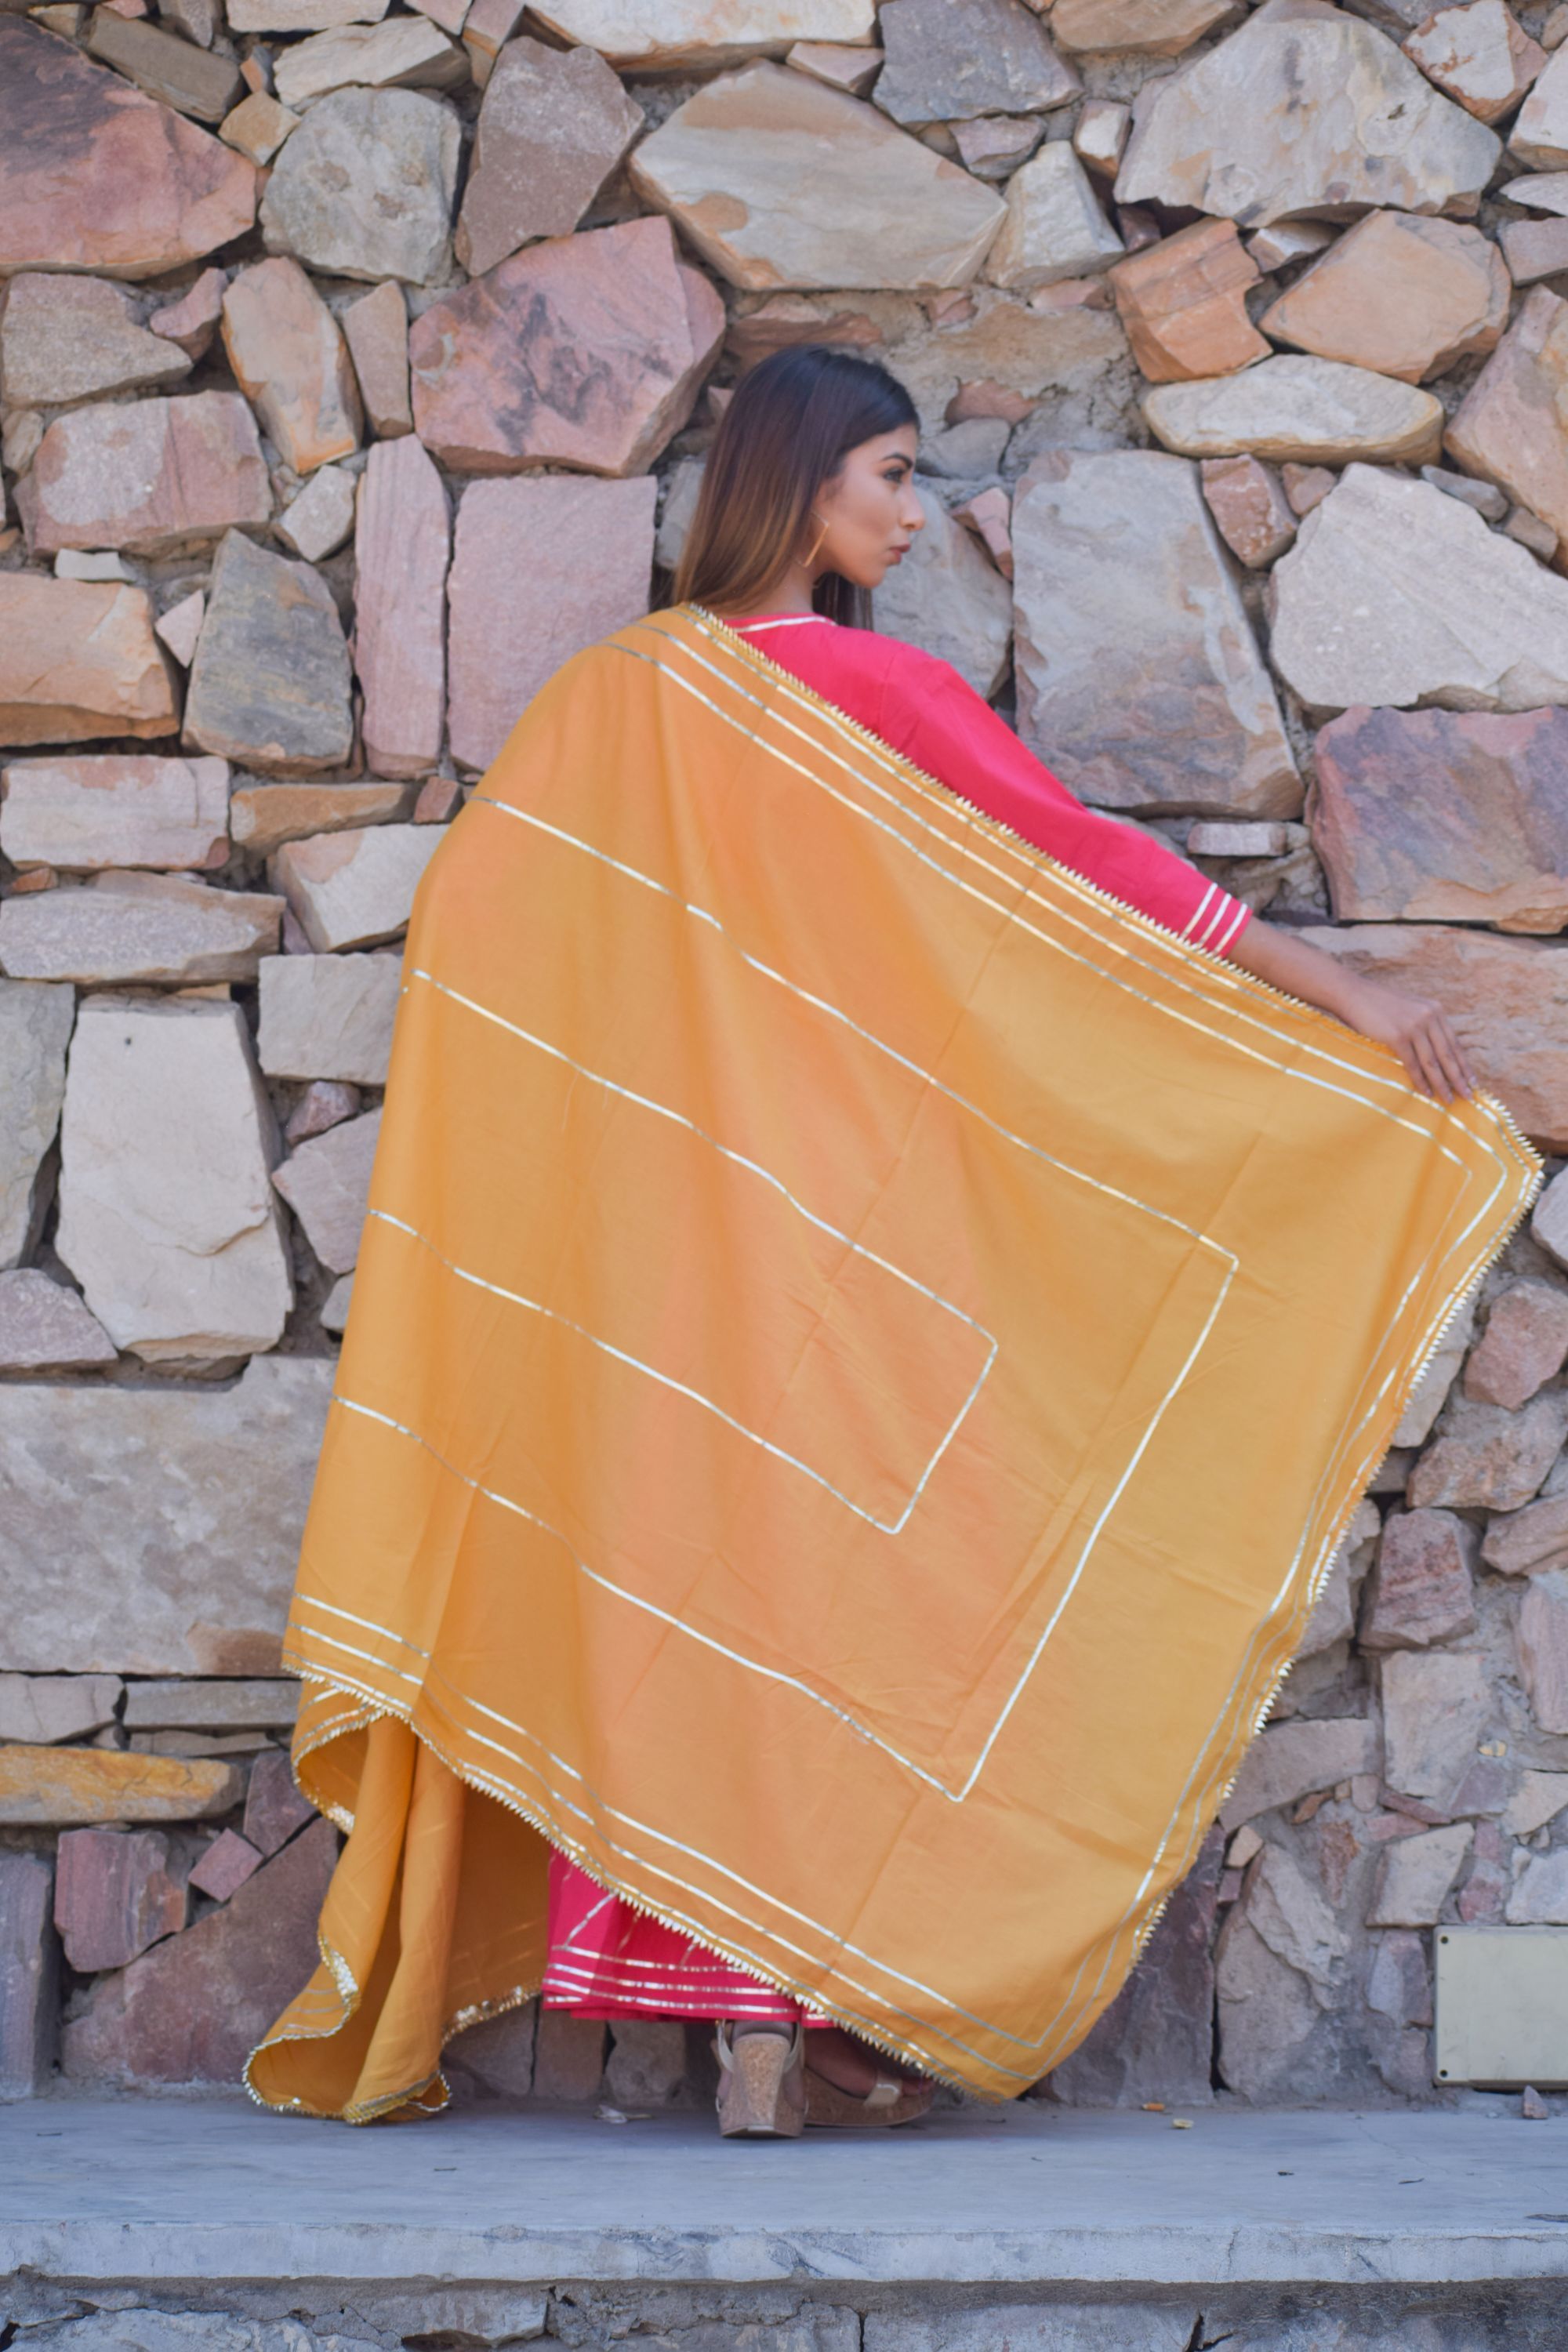 Women's Pink Cotton Anarkali Gown With Dupatta (2Pcs Set) - Saras The Label